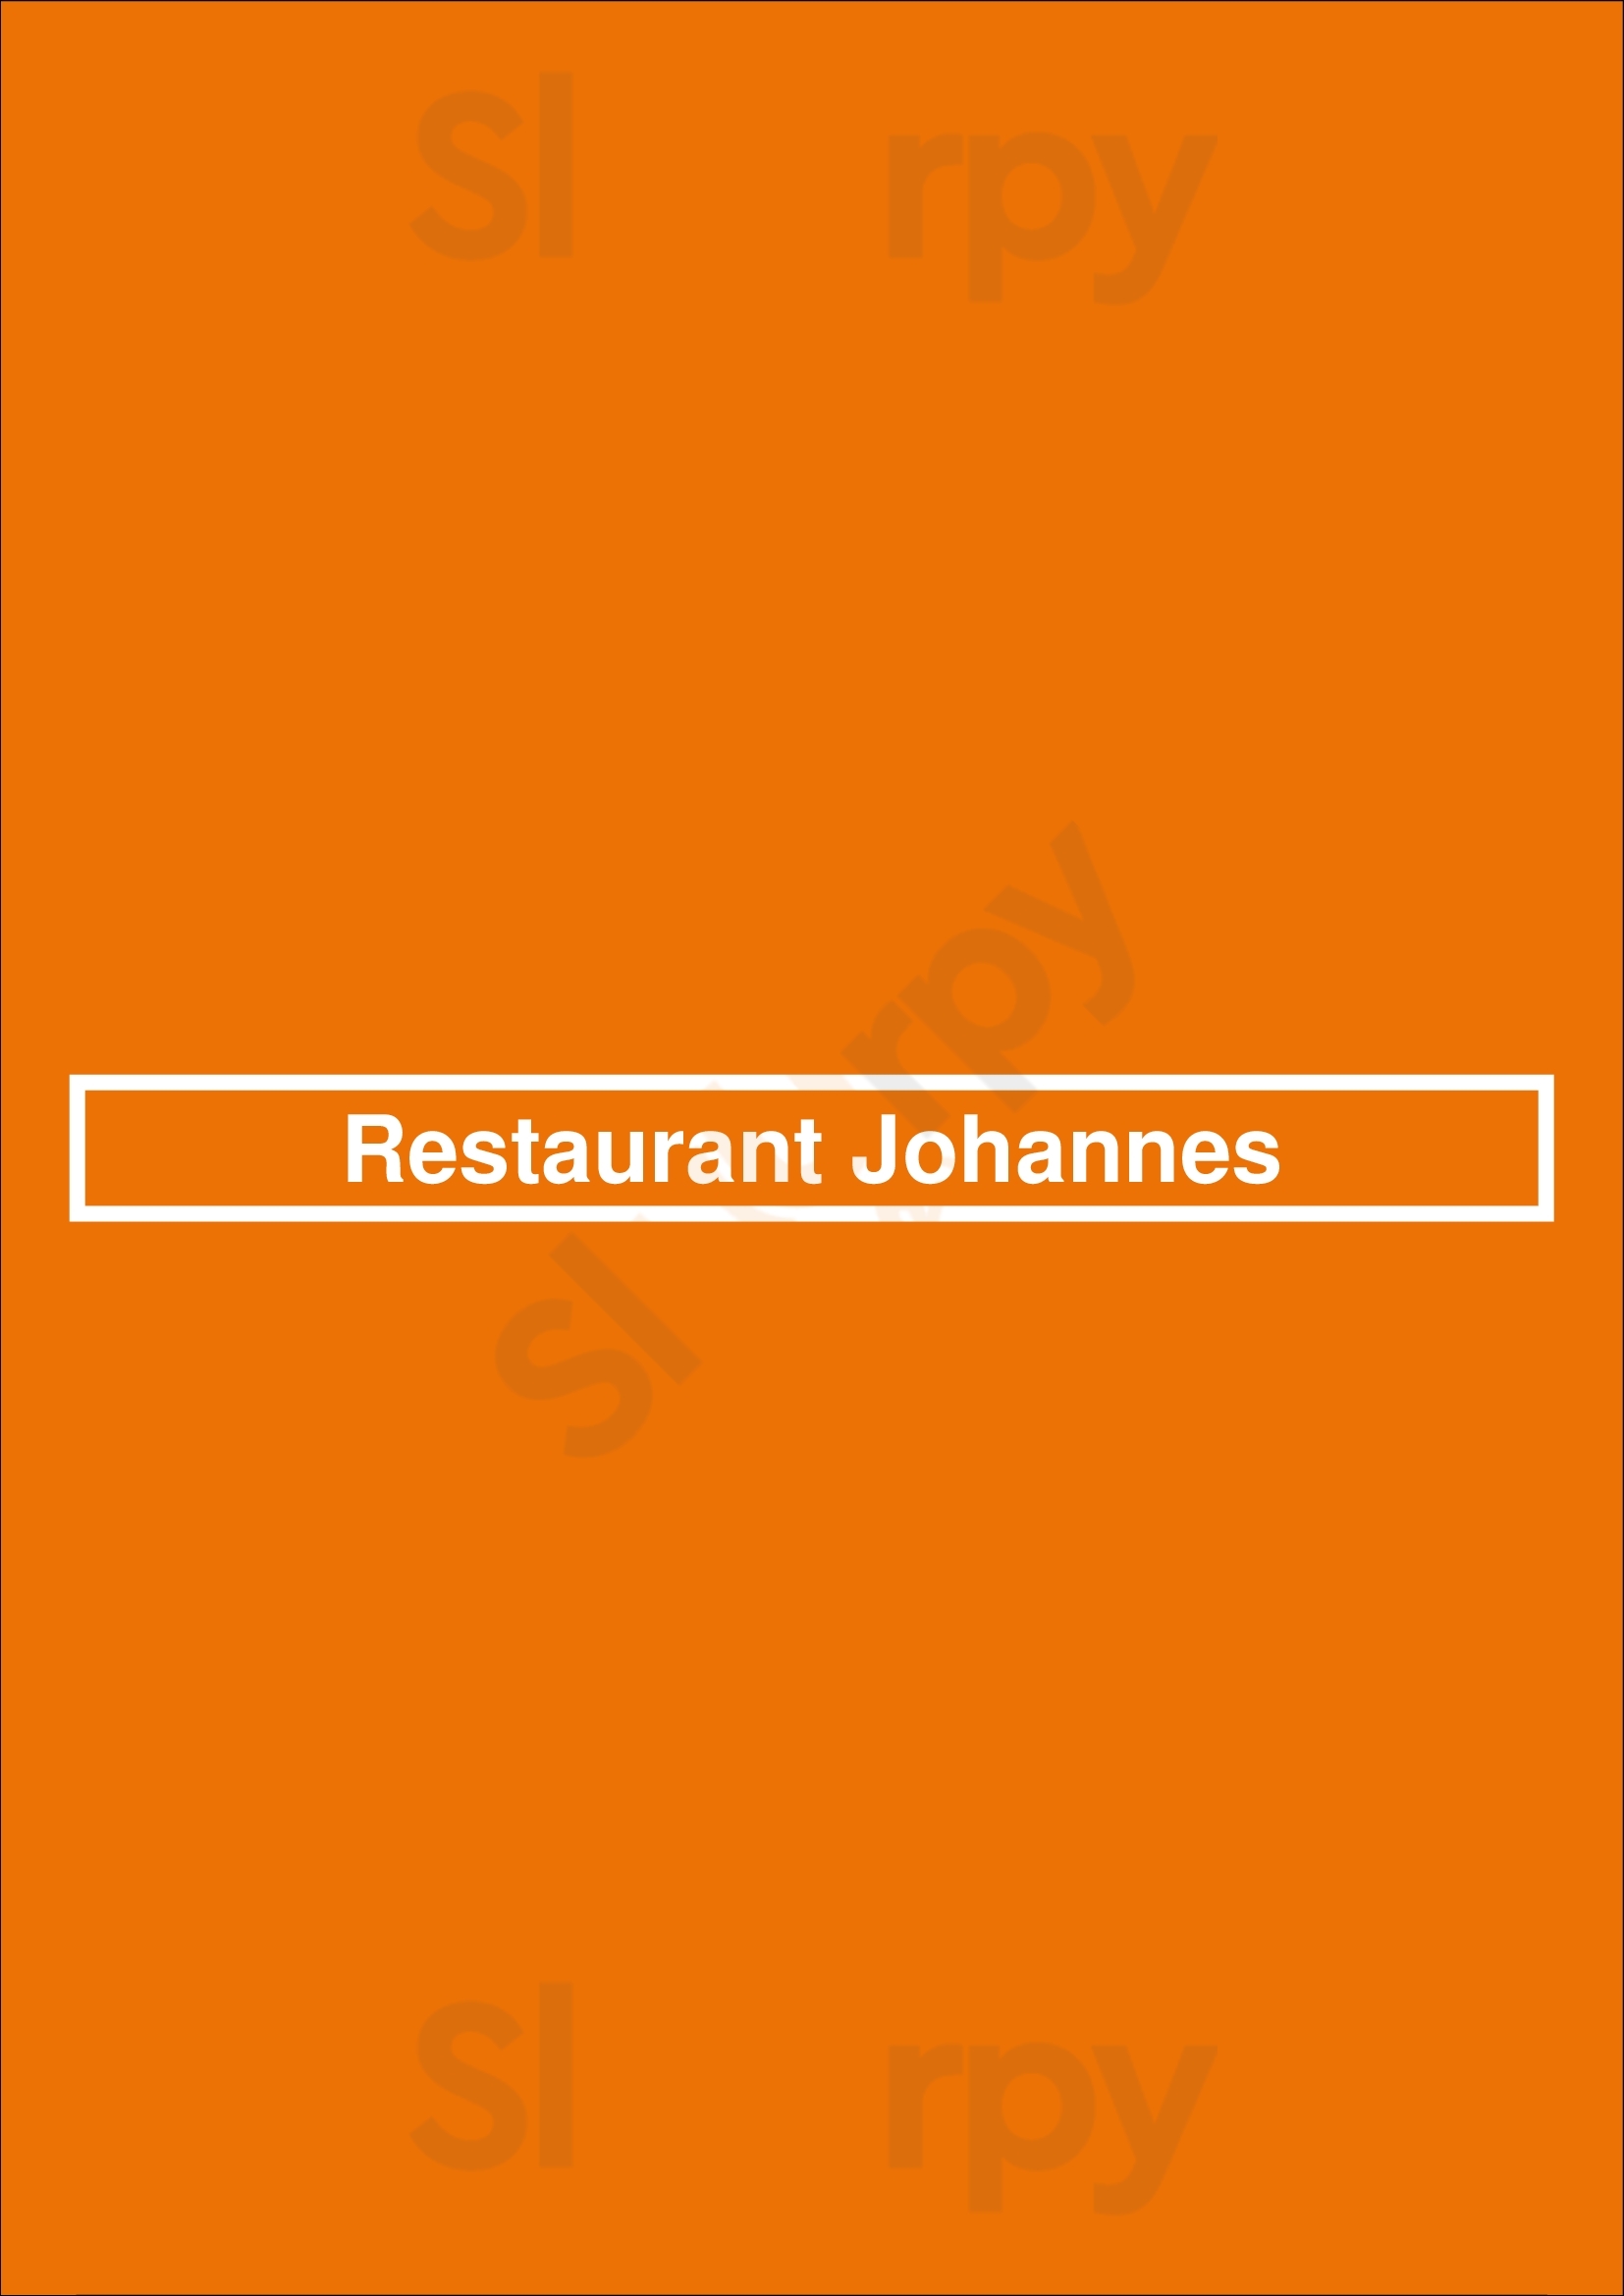 Restaurant Johannes Amsterdam Menu - 1